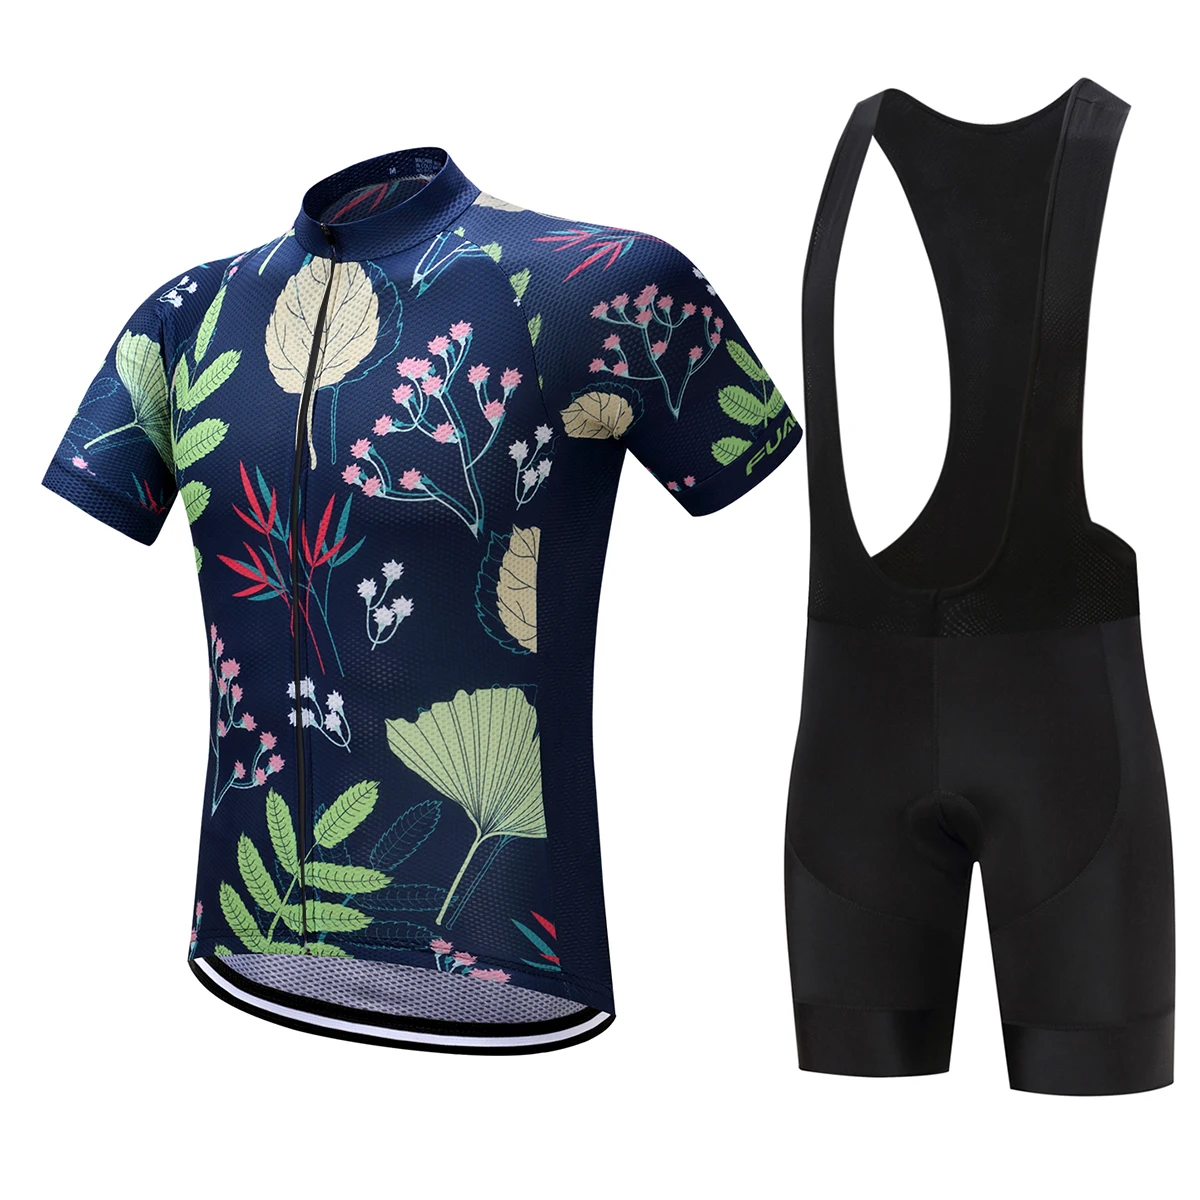 FUALRNY 2017 Cycling clothing Sportswear Racing Bike cycling bib shorts cycling set Short Sleeve cycling shorts